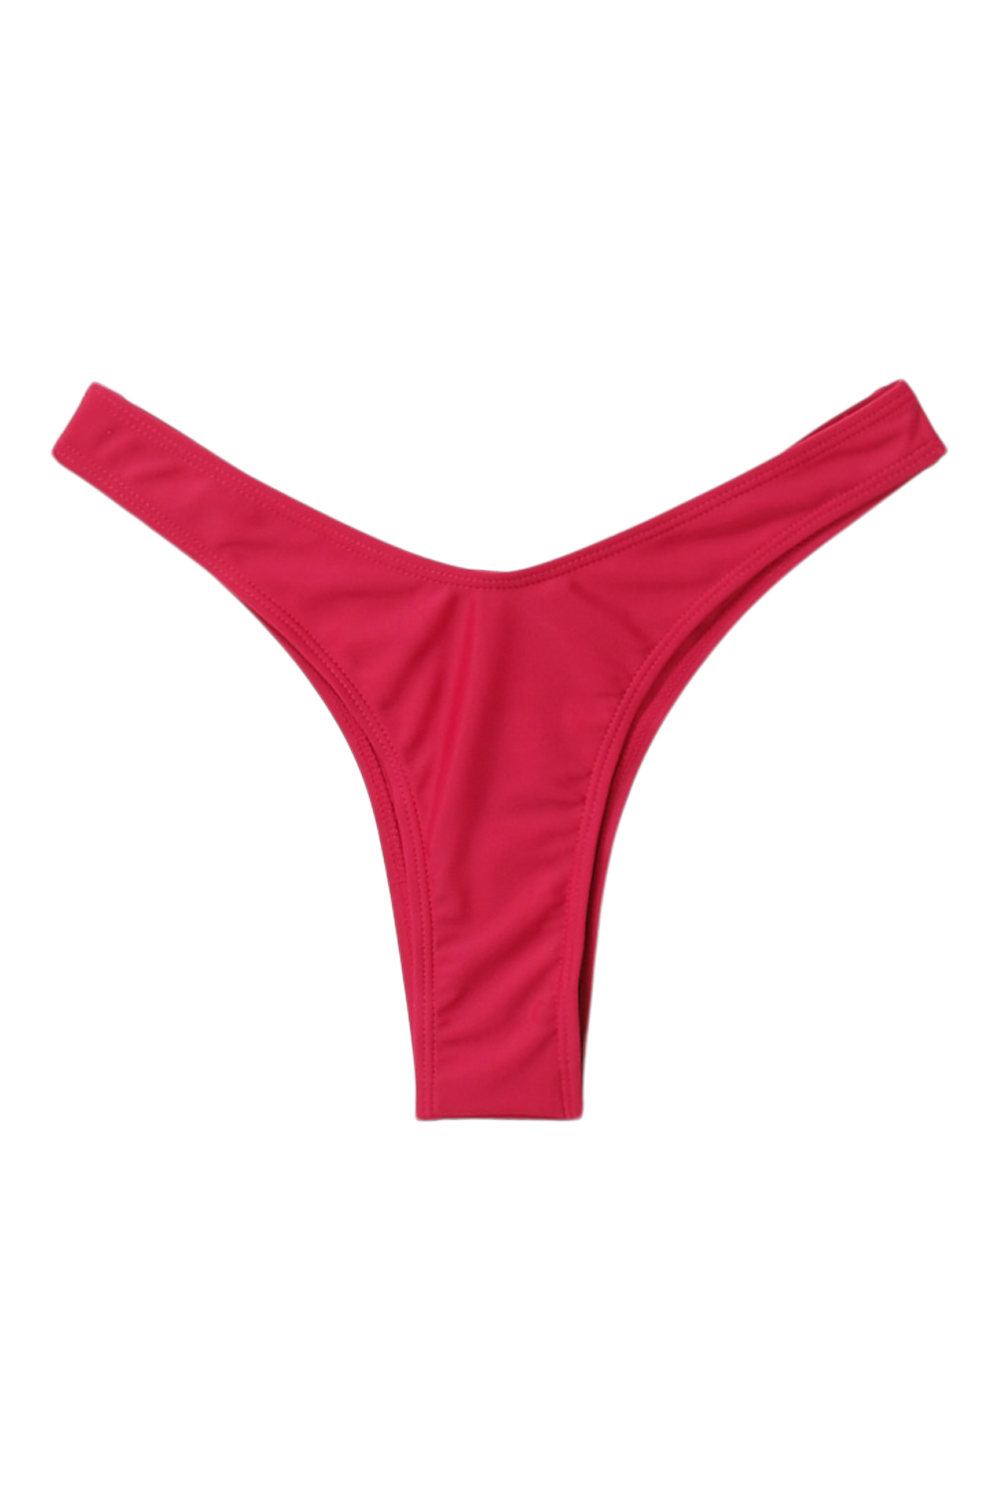 https://media.boohoo.com/i/boohoo/fzz37191_fuchsia_xl_4/female-fuchsia-v-front-tanga-thong-bikini-brief